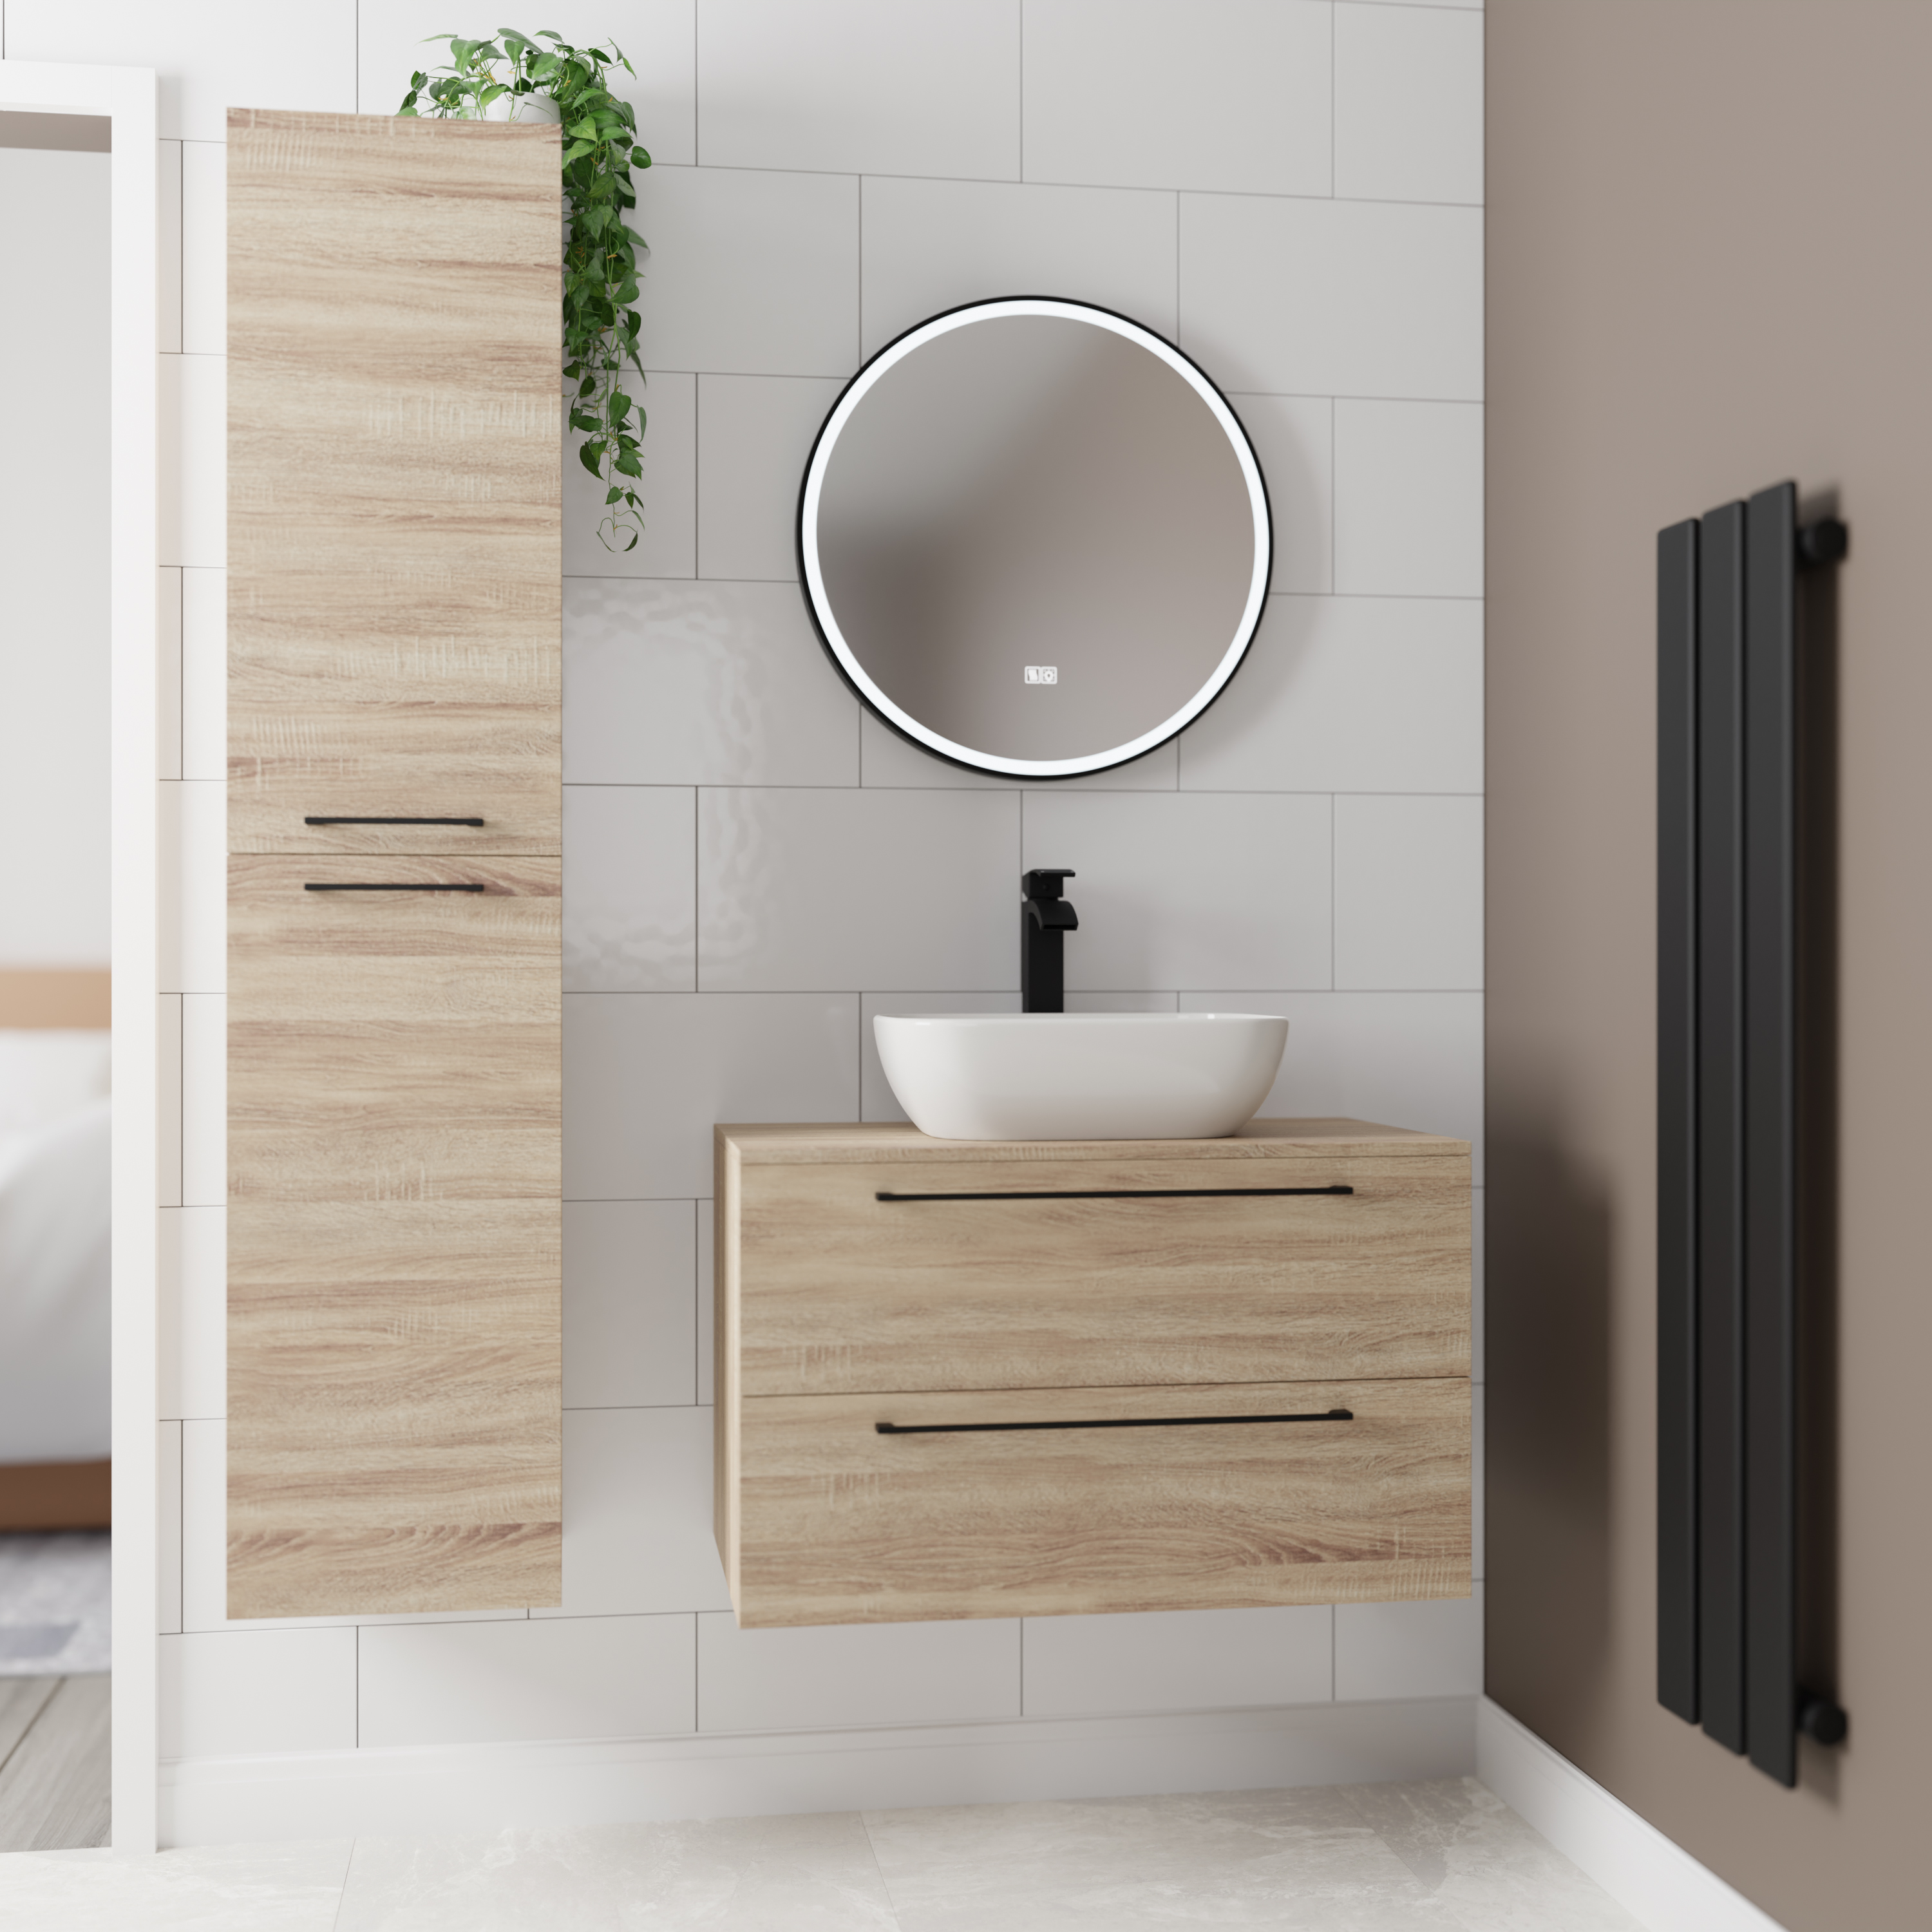 Wood effect bathroom suite with black slimline radiator on the wall